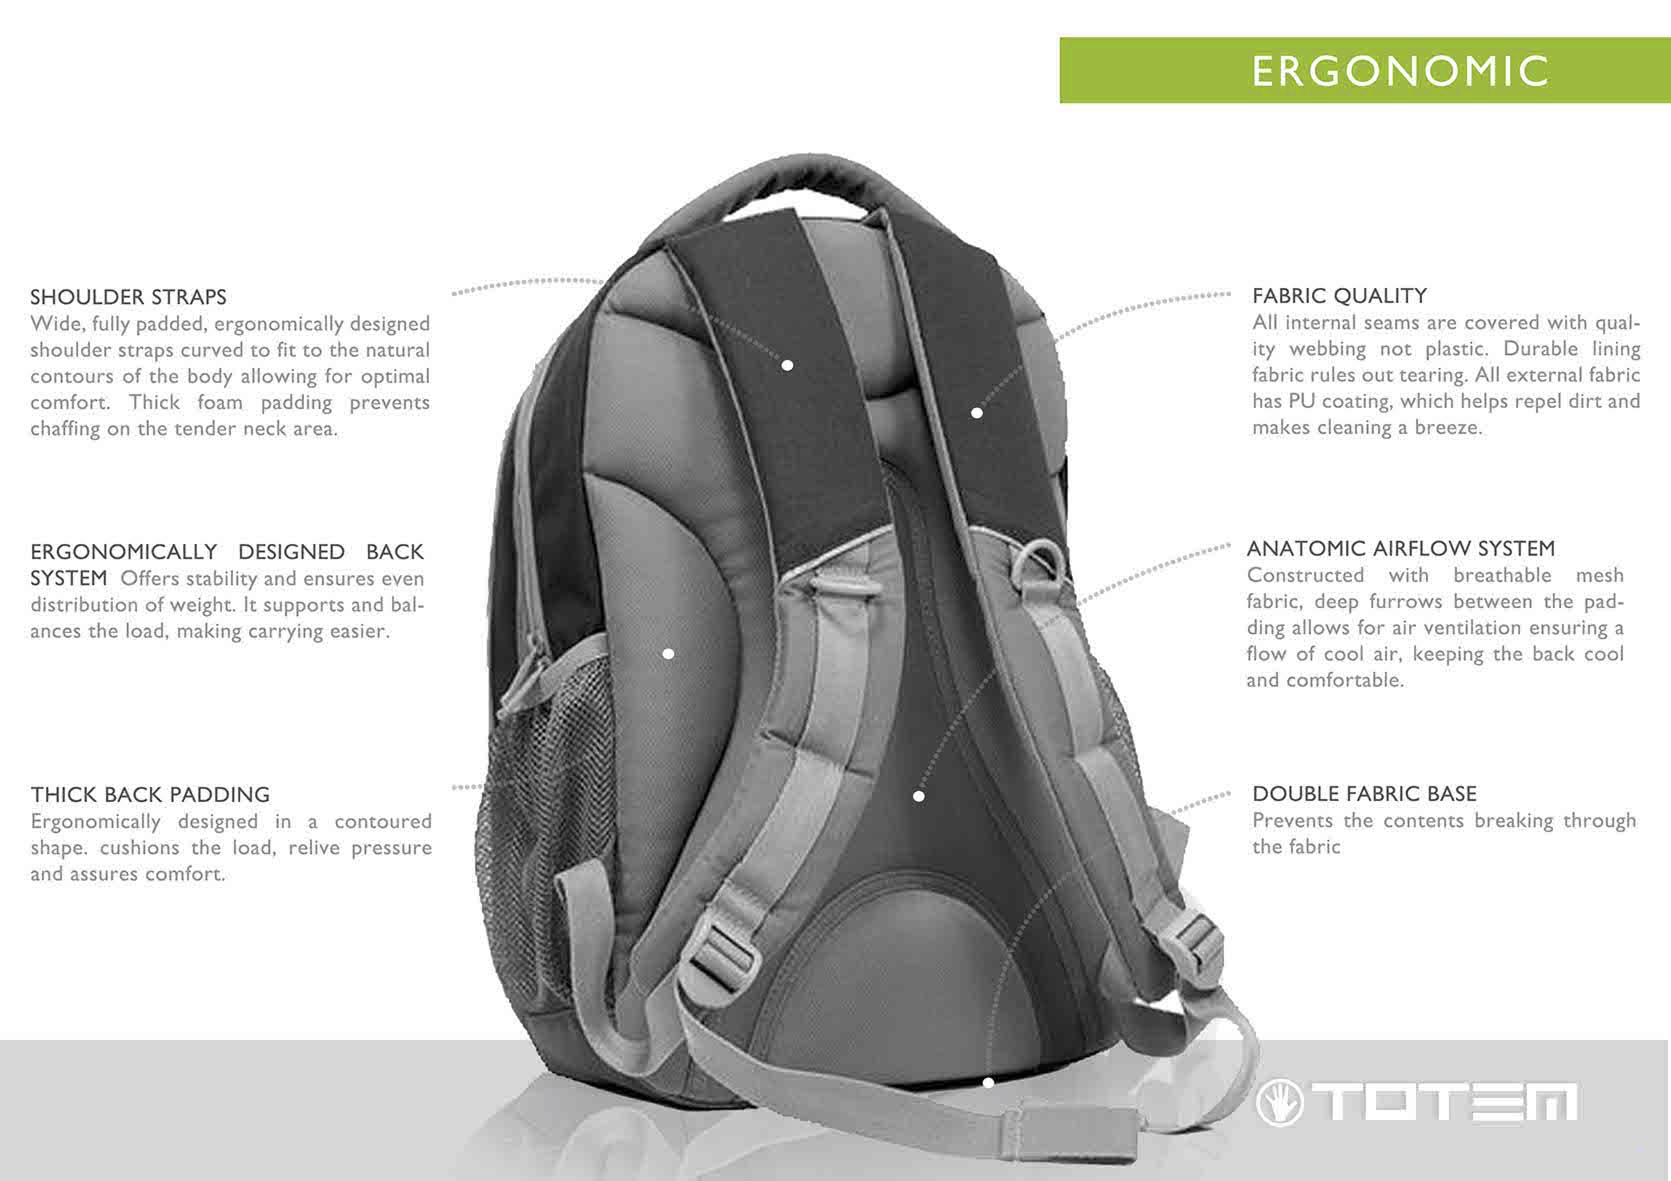 Ergonomic backpack